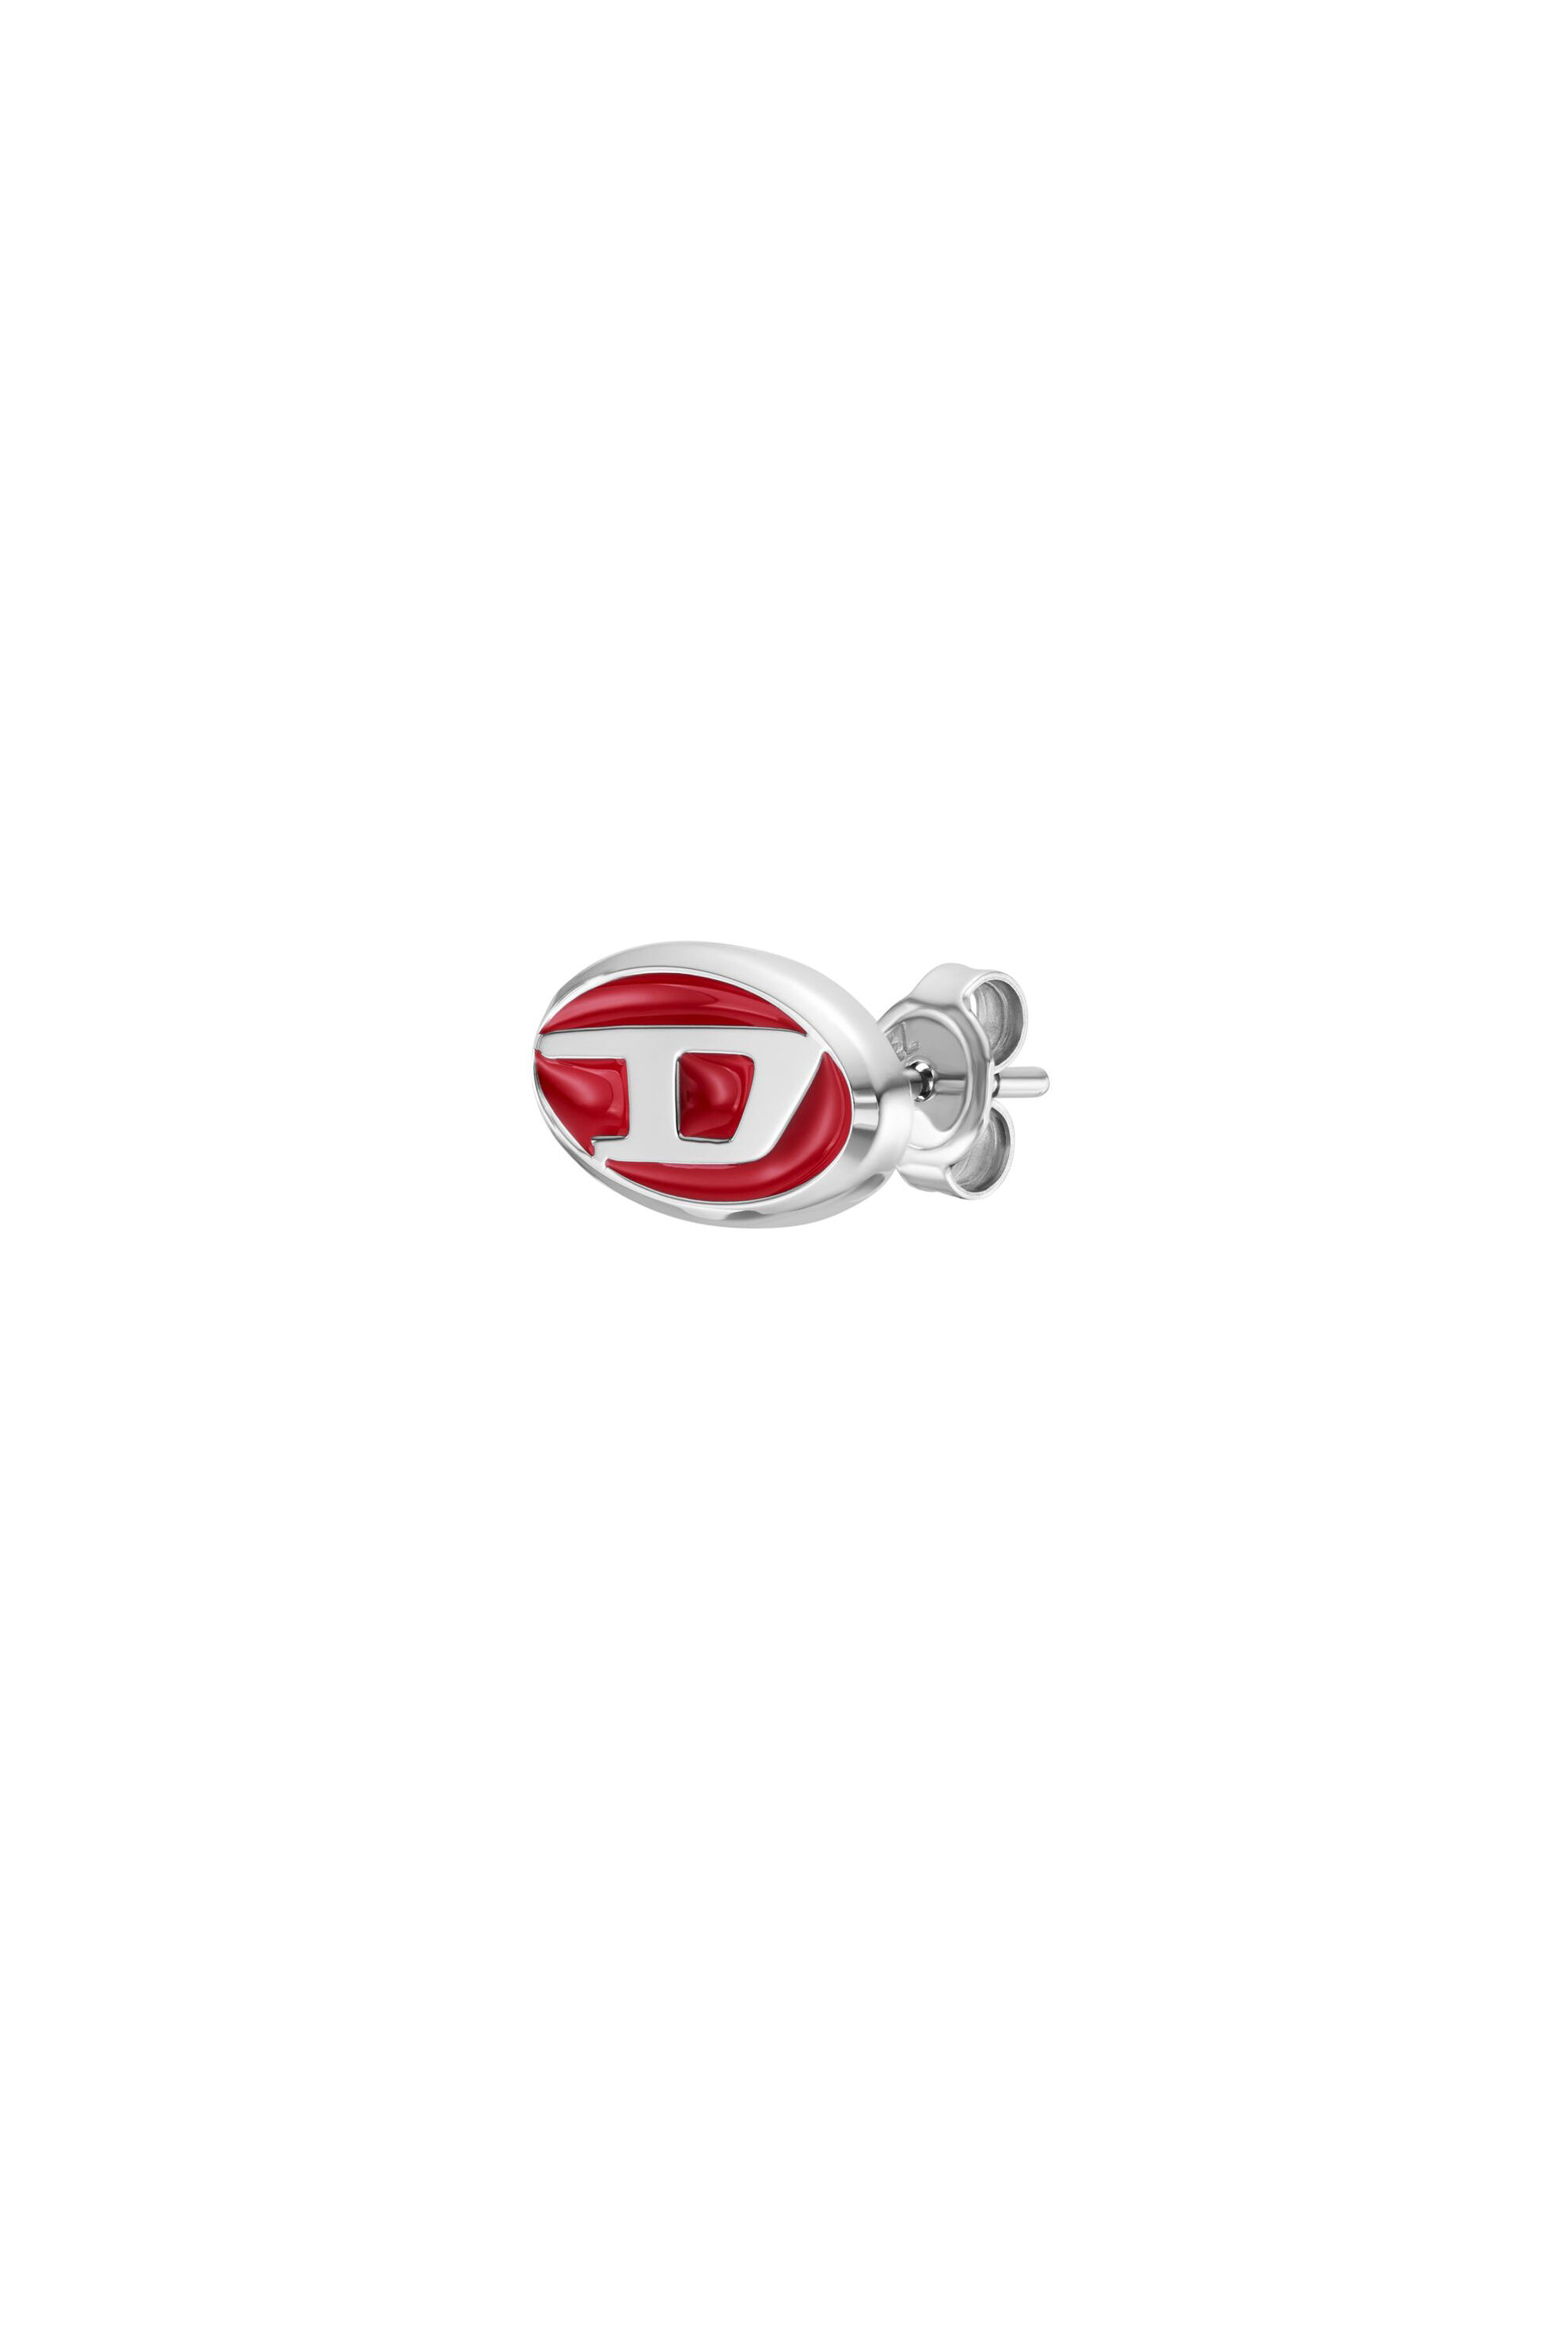 Diesel - DX1443, Unisex Red enamel and stainless steel single stud earring in Silver - Image 1